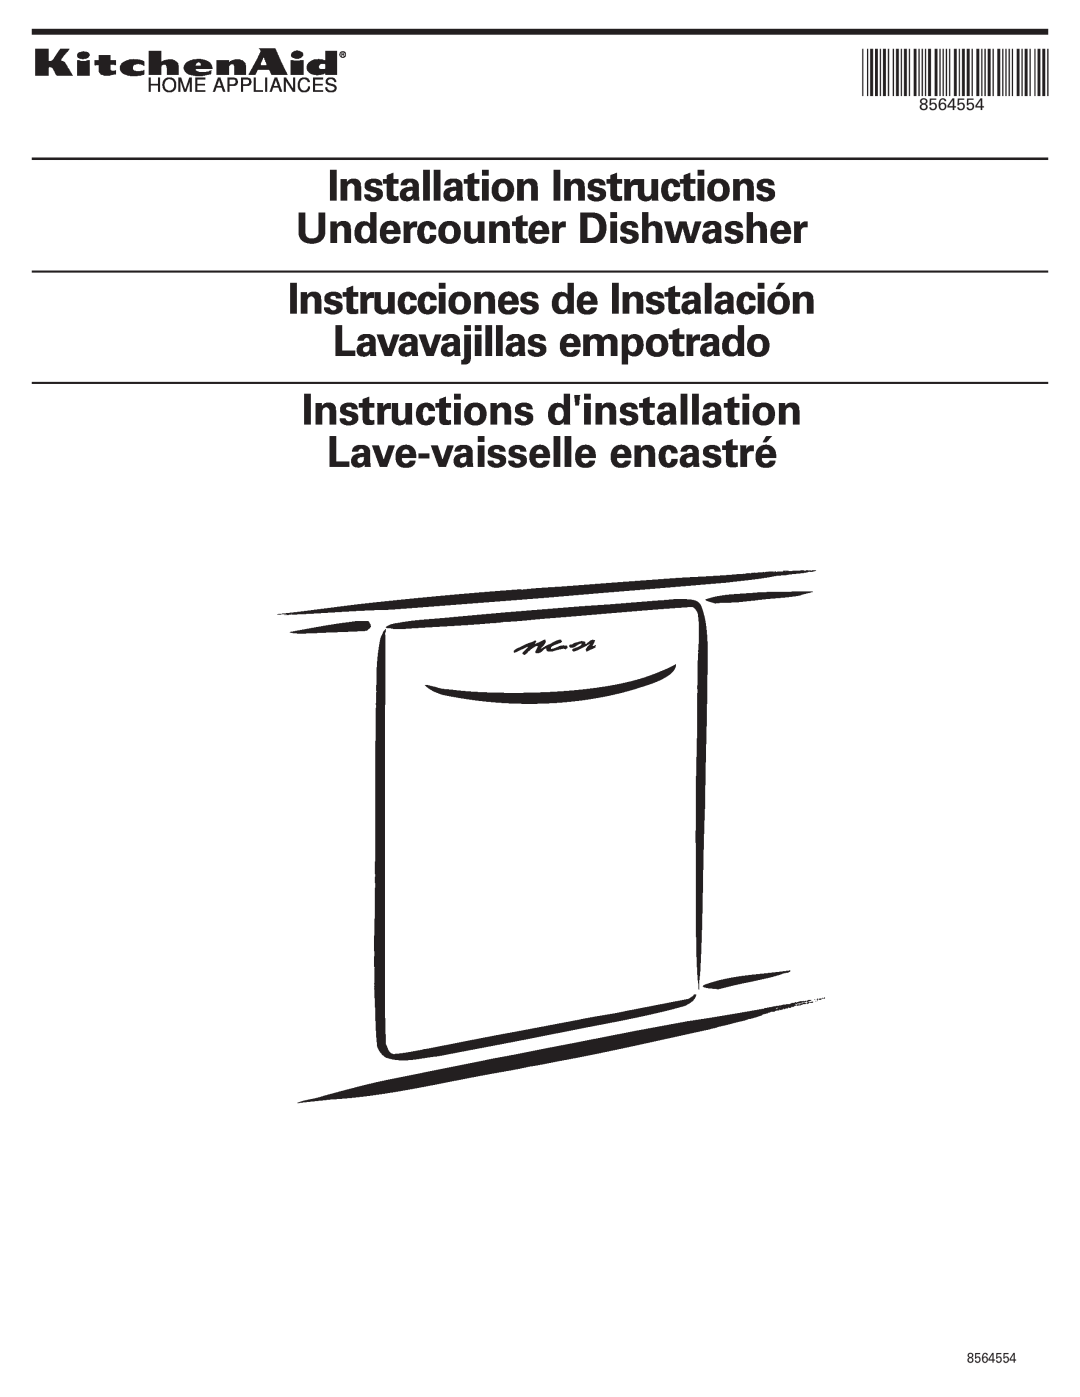 KitchenAid 8564554 installation instructions Home Appliances, Installation Instructions Undercounter Dishwasher 